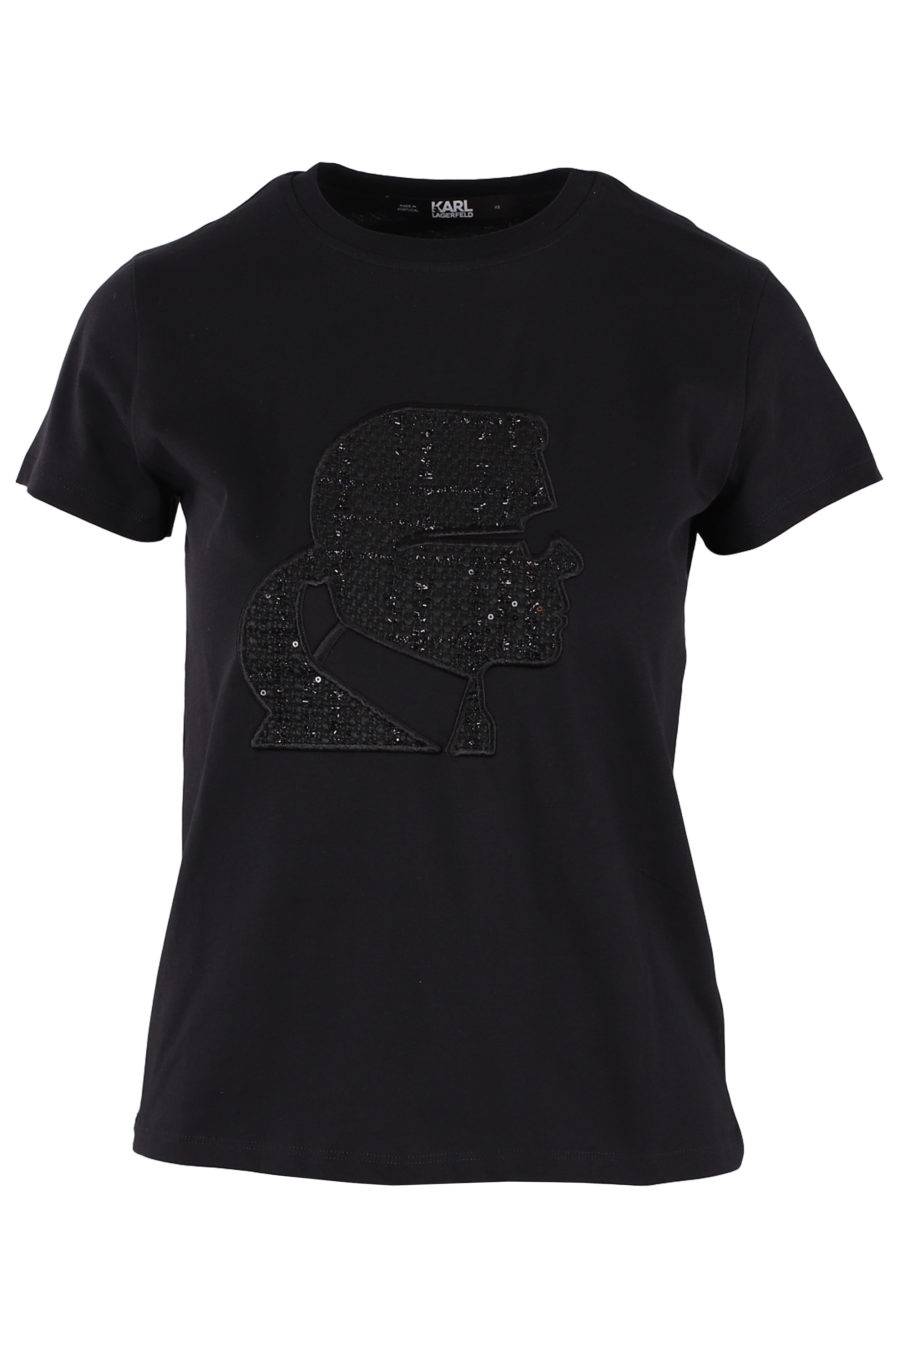 Camiseta negra con perfil de "Karl" en bouclé - IMG 9562